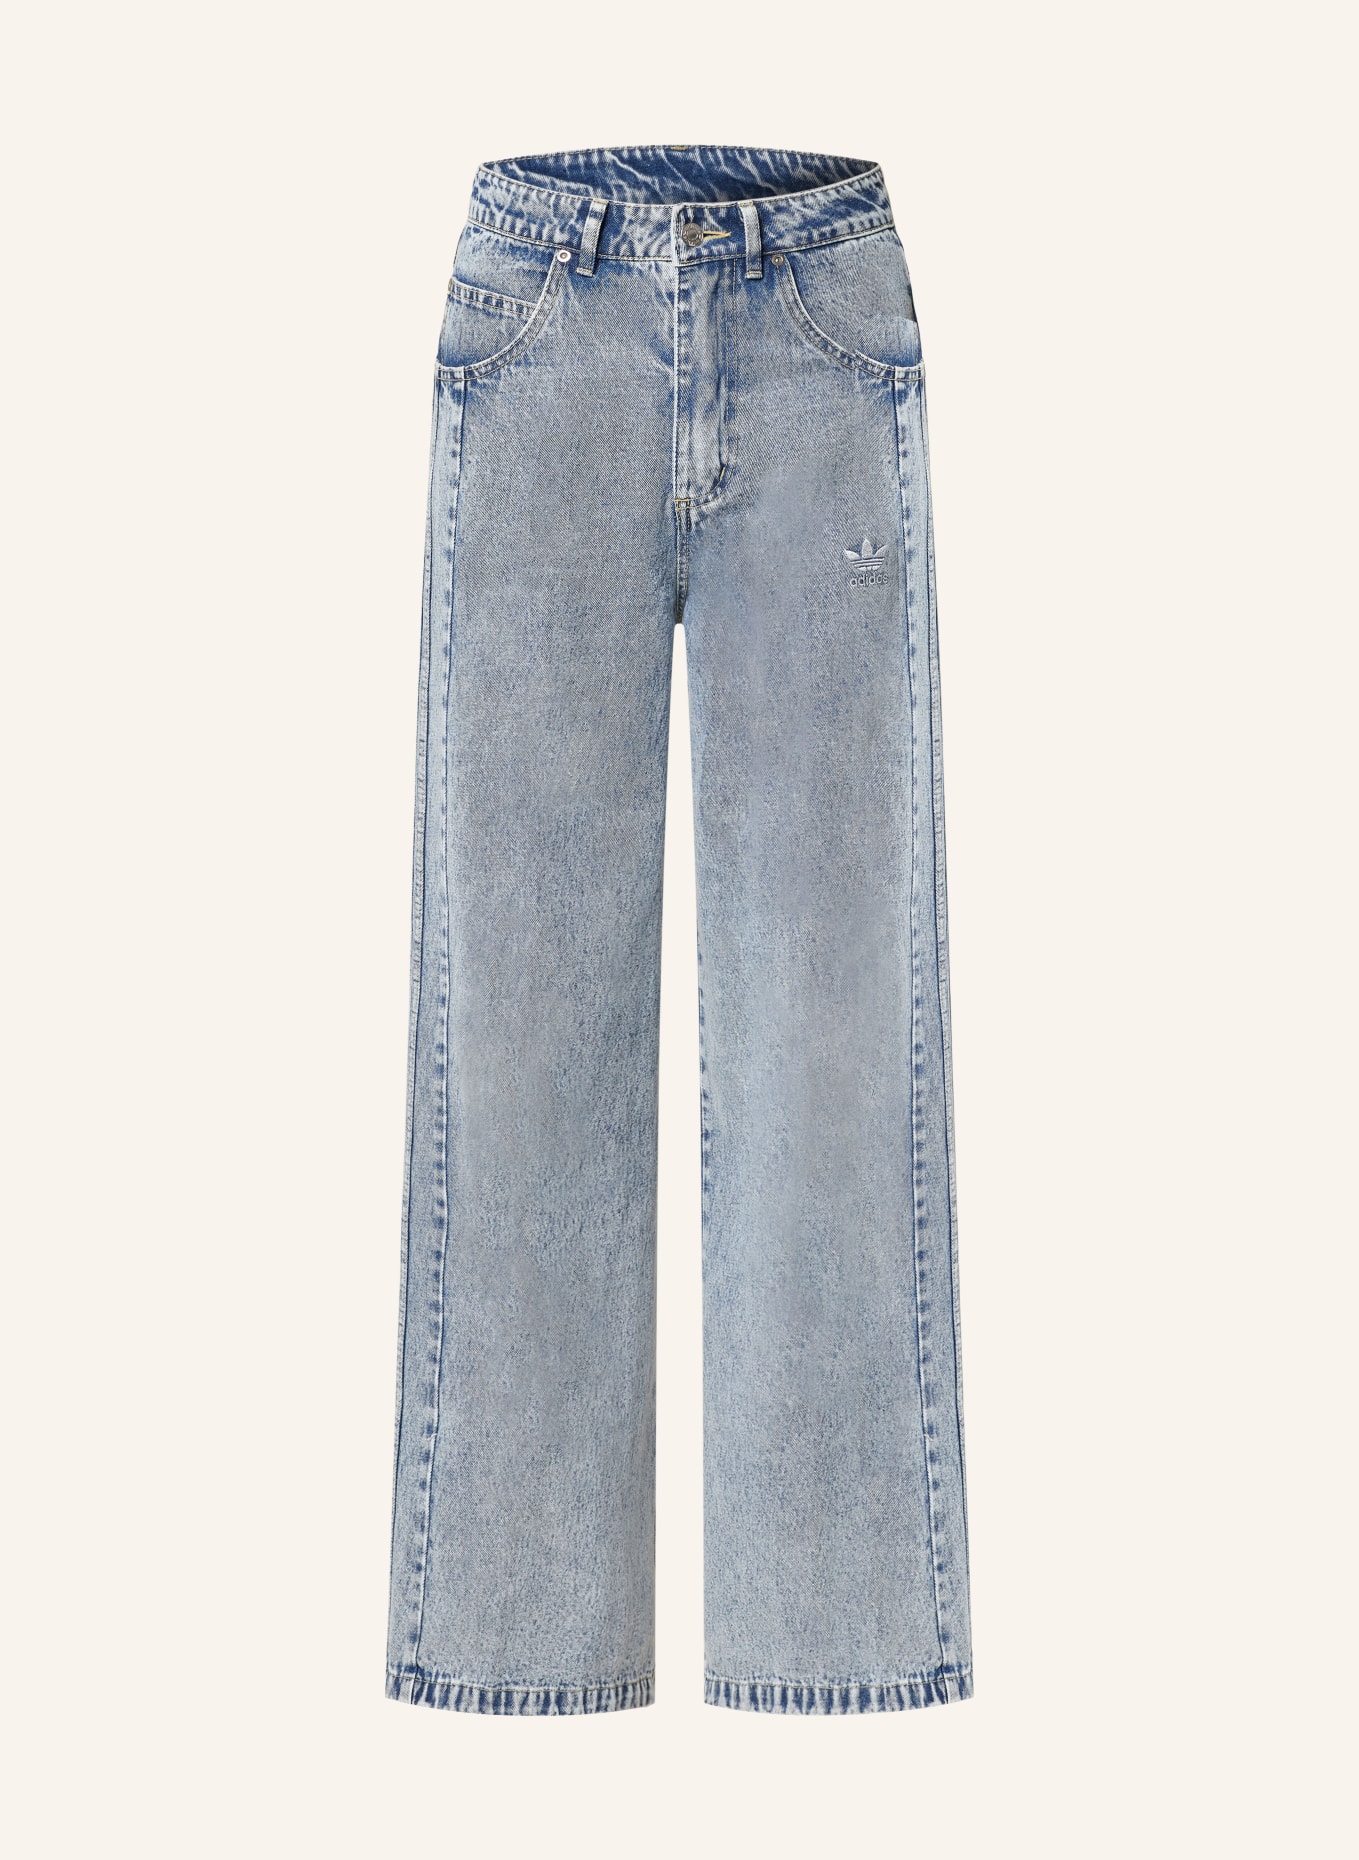 adidas Originals Straight Jeans ADIBREAK, Farbe: LGHDEN (Bild 1)